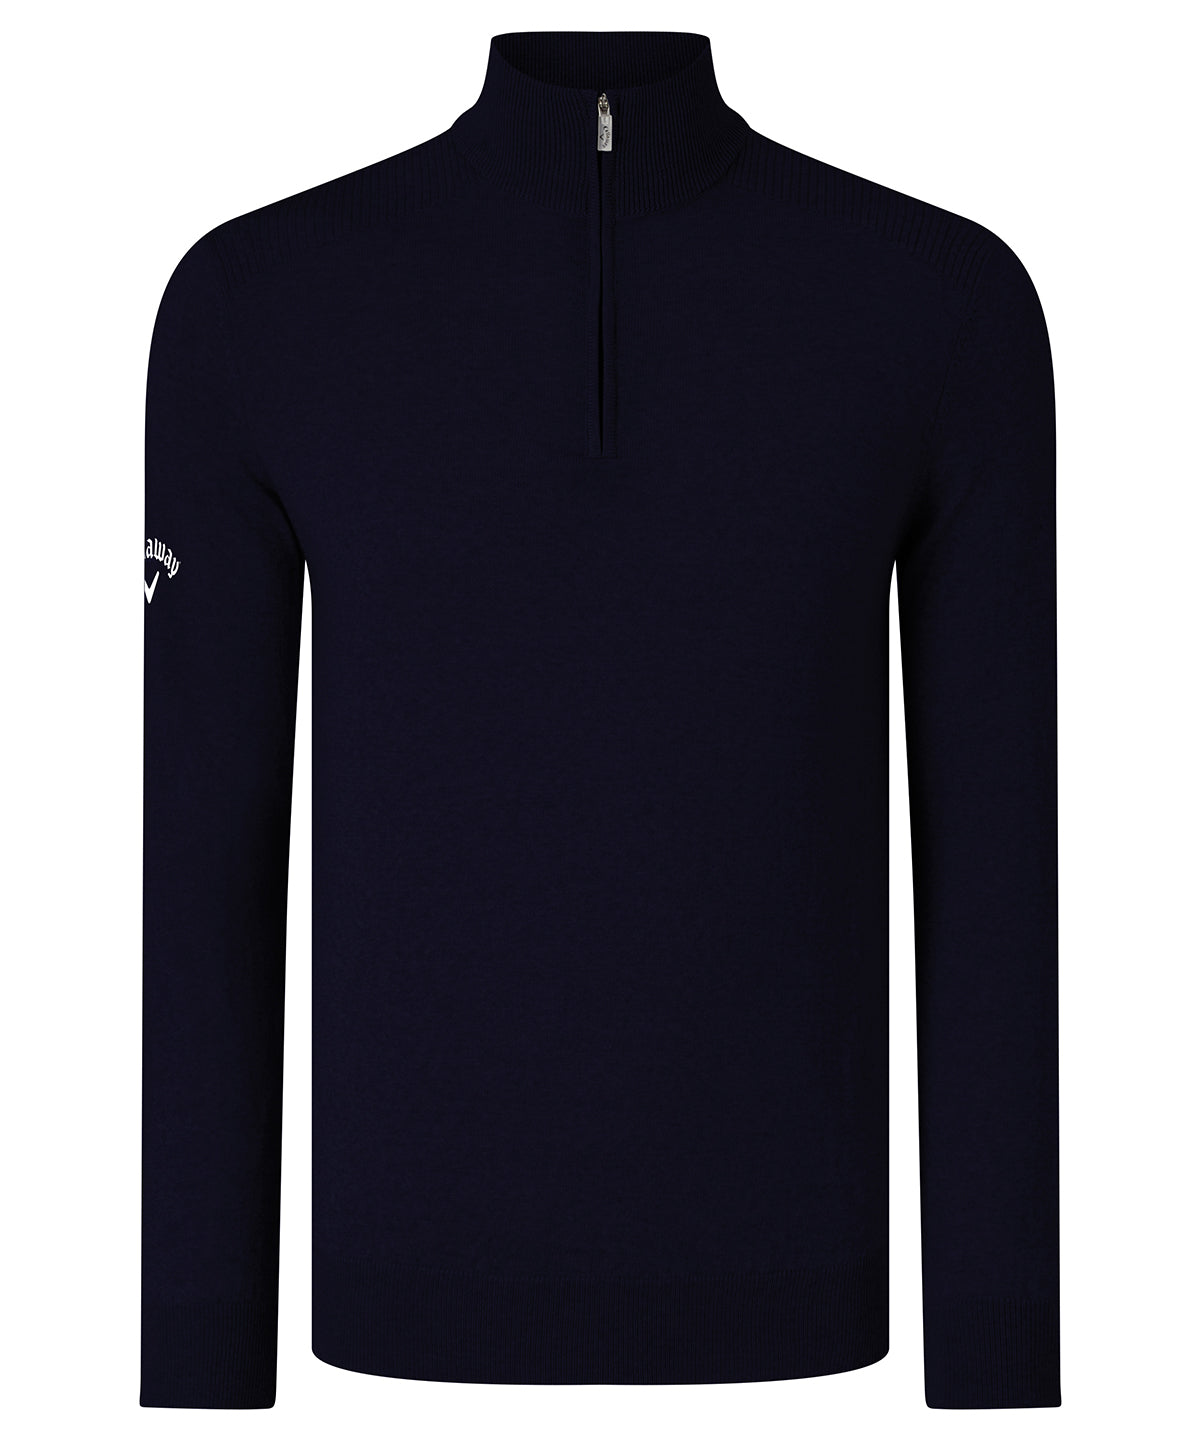 Personalised Knitted Jumpers - Black Callaway Ribbed ¼ zip Merino sweater